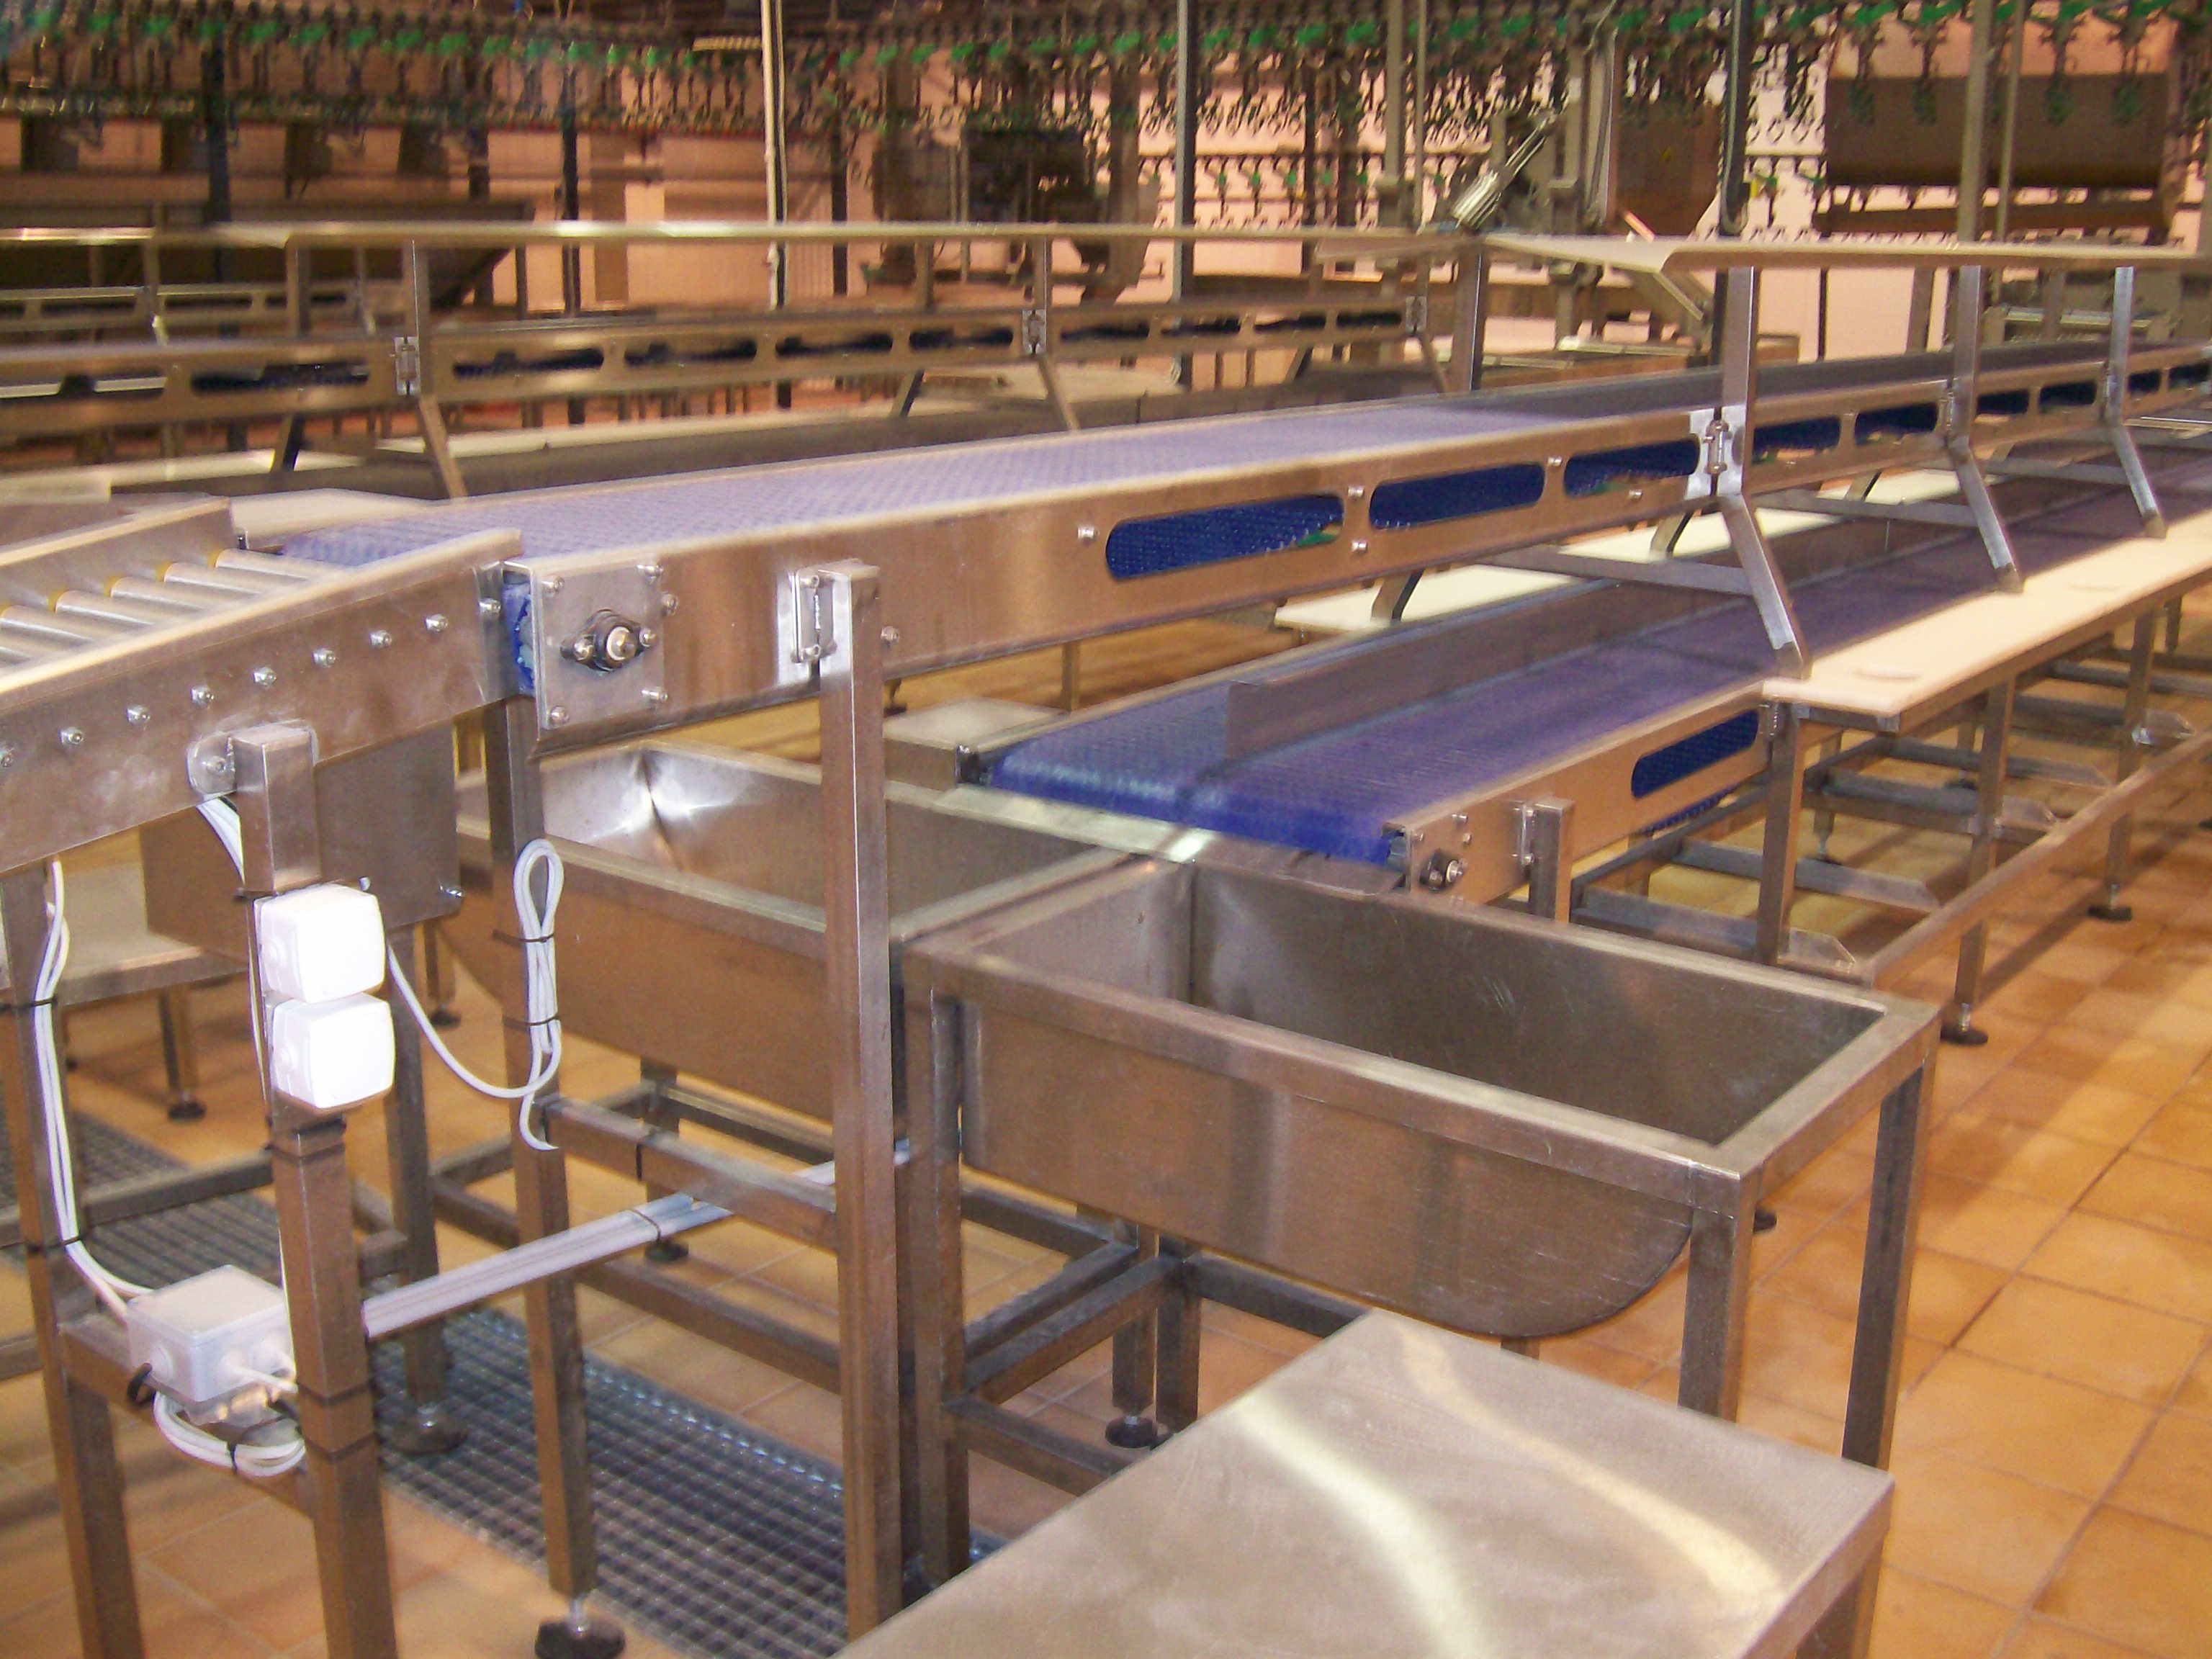 Multilayer cutting conveyors